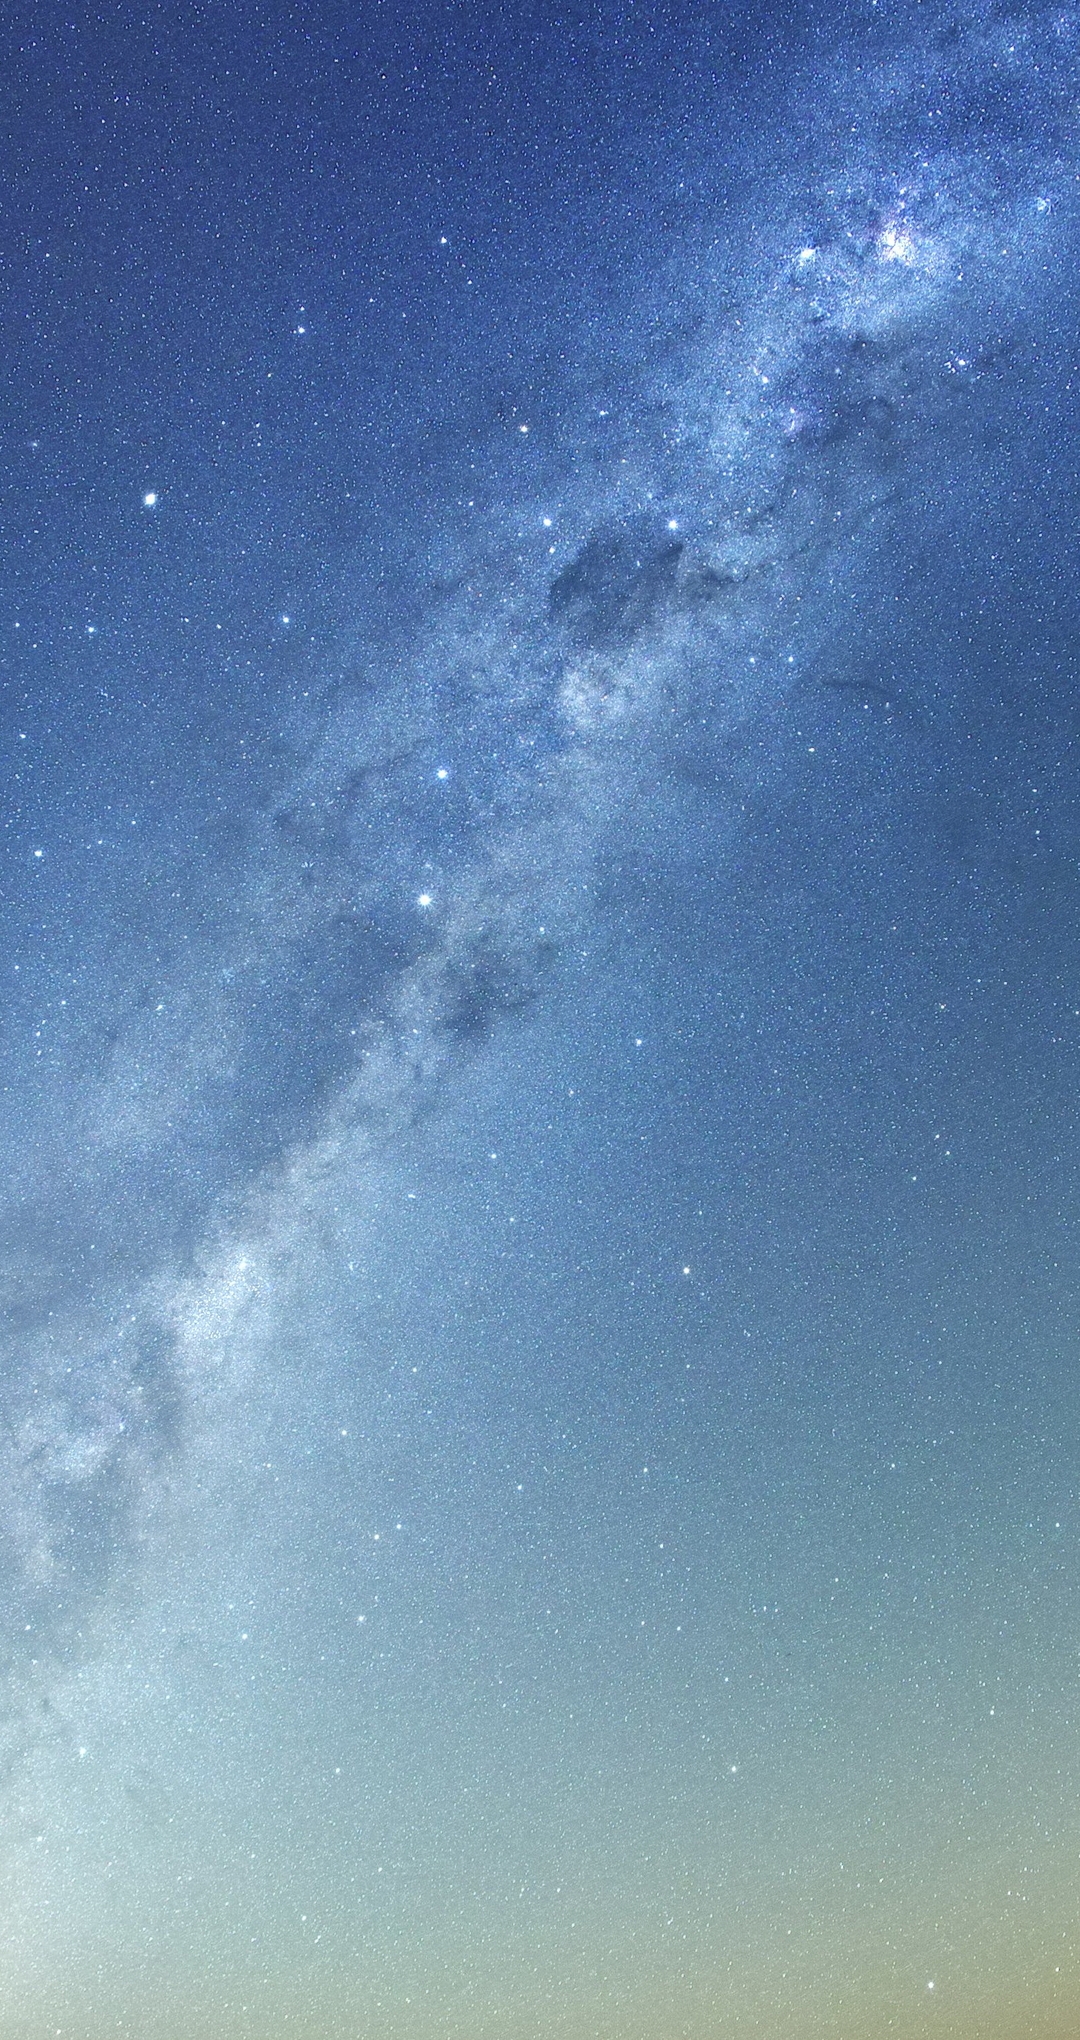 Image: Sky, space, stars, milky way, halo, small, big, Magellanic cloud